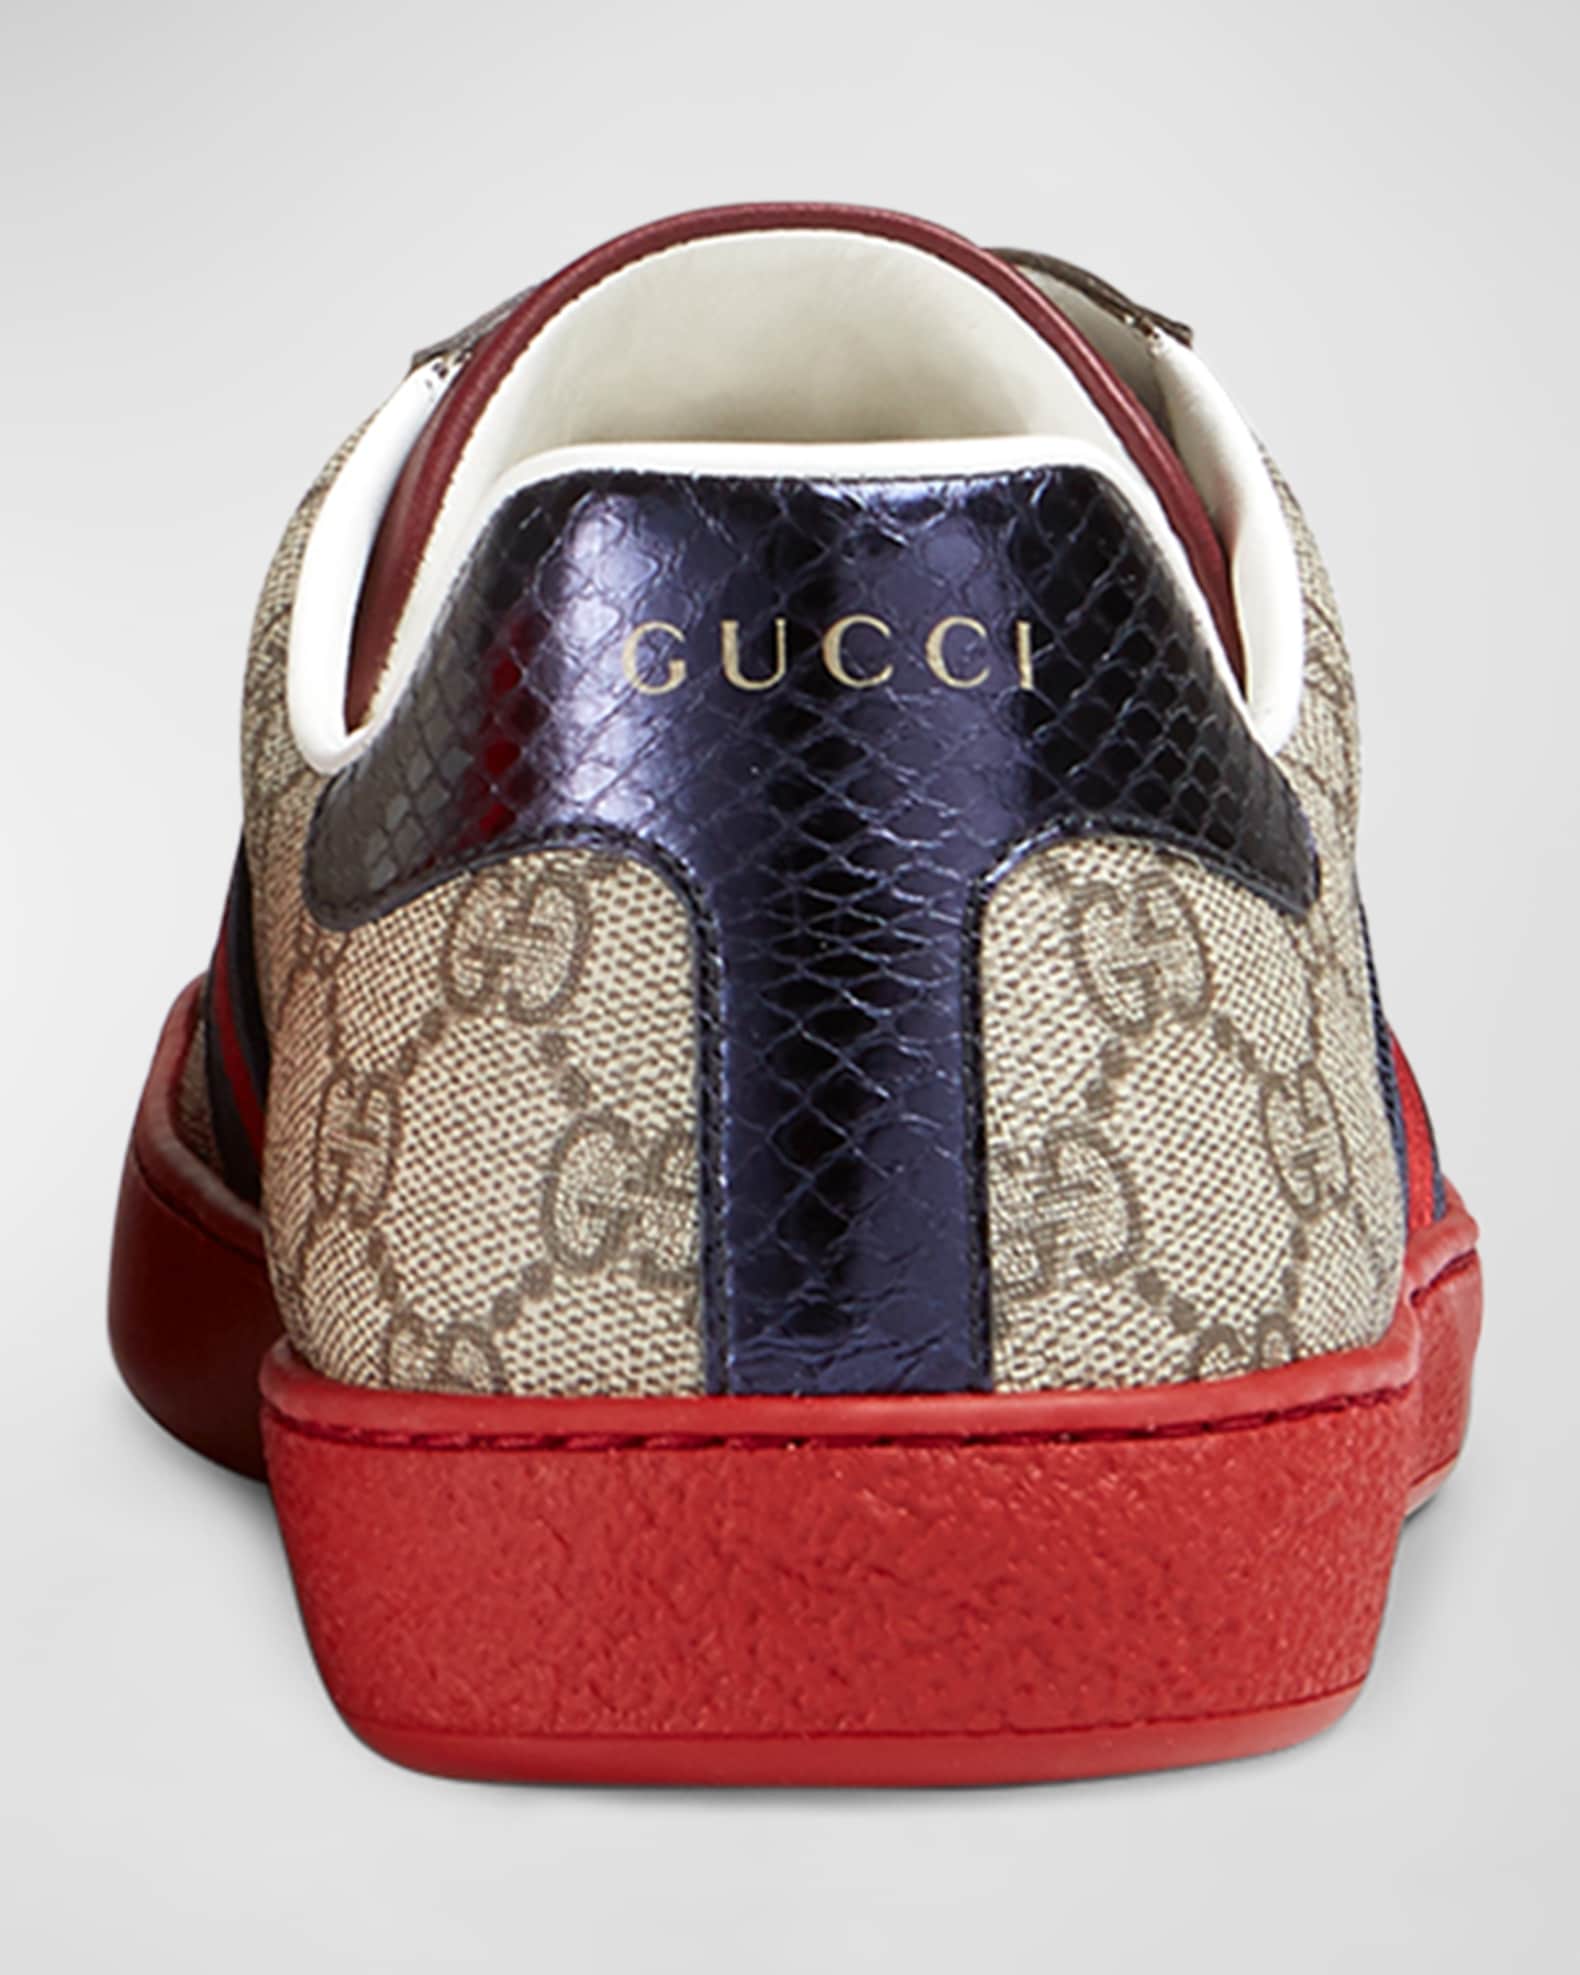 Gucci Men's GG Supreme New Ace Sneakers